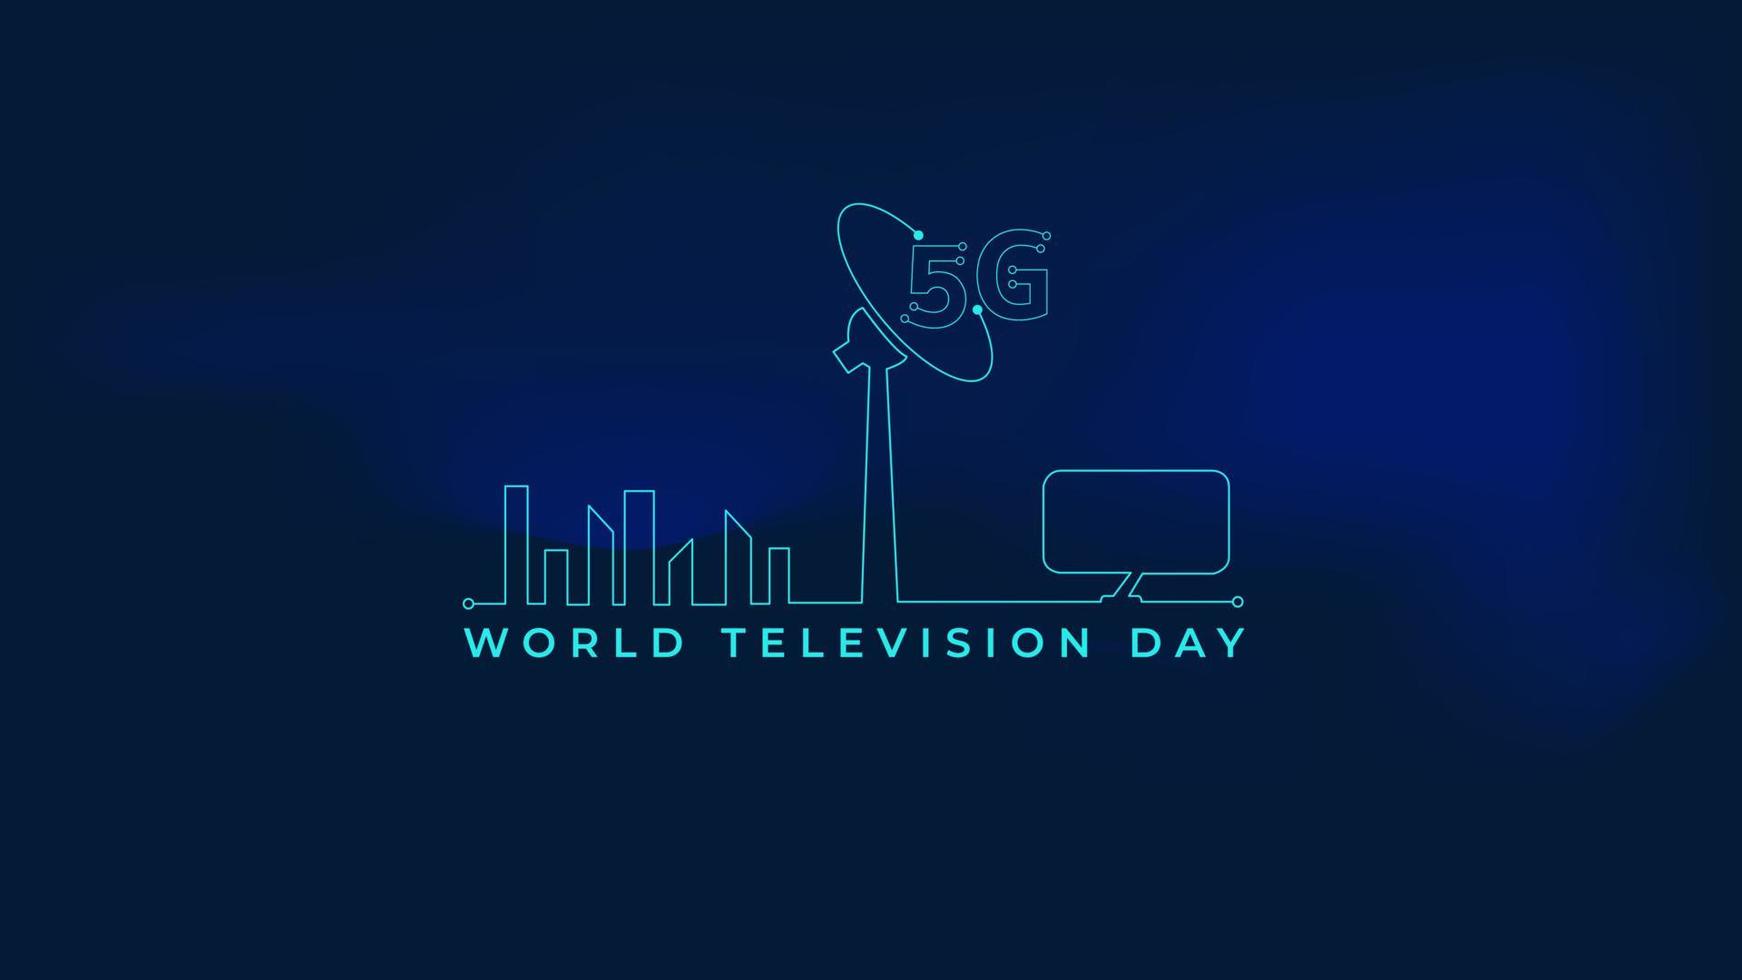 World Television Day 21 November, Line art design 4K UHD Size. Dark blue background vector